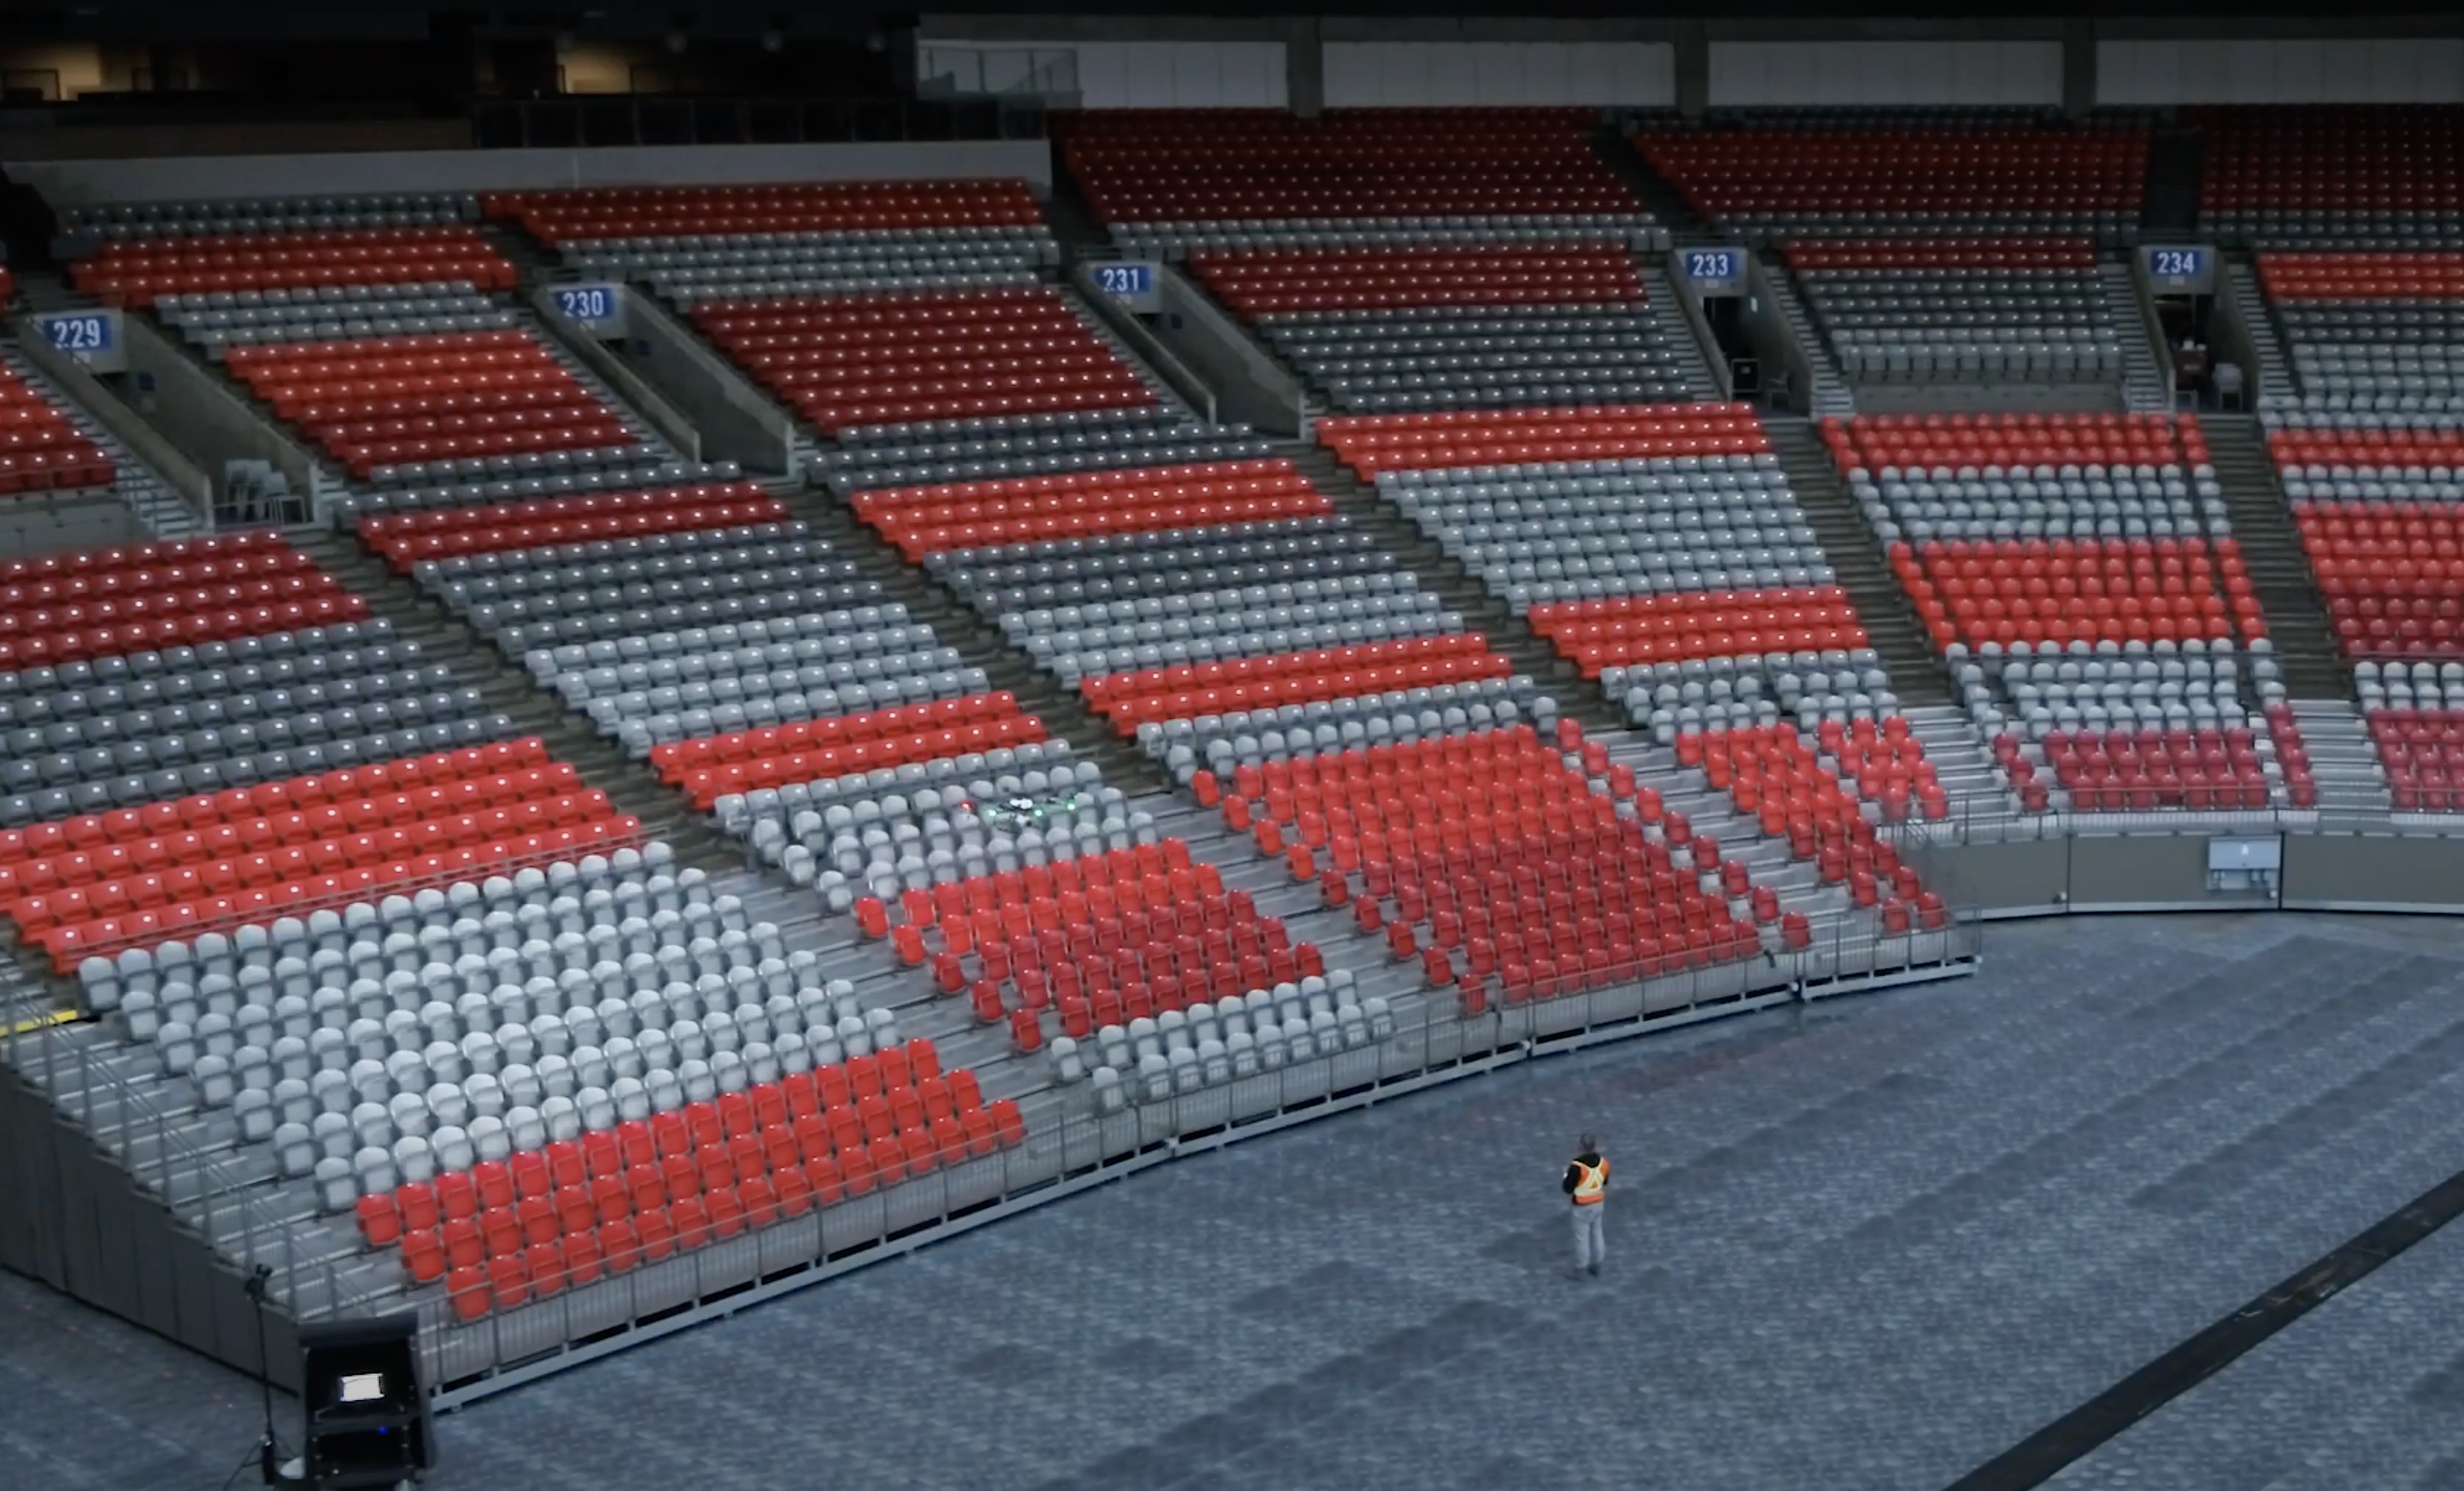 Stadium Arena drone spraying disinfectant